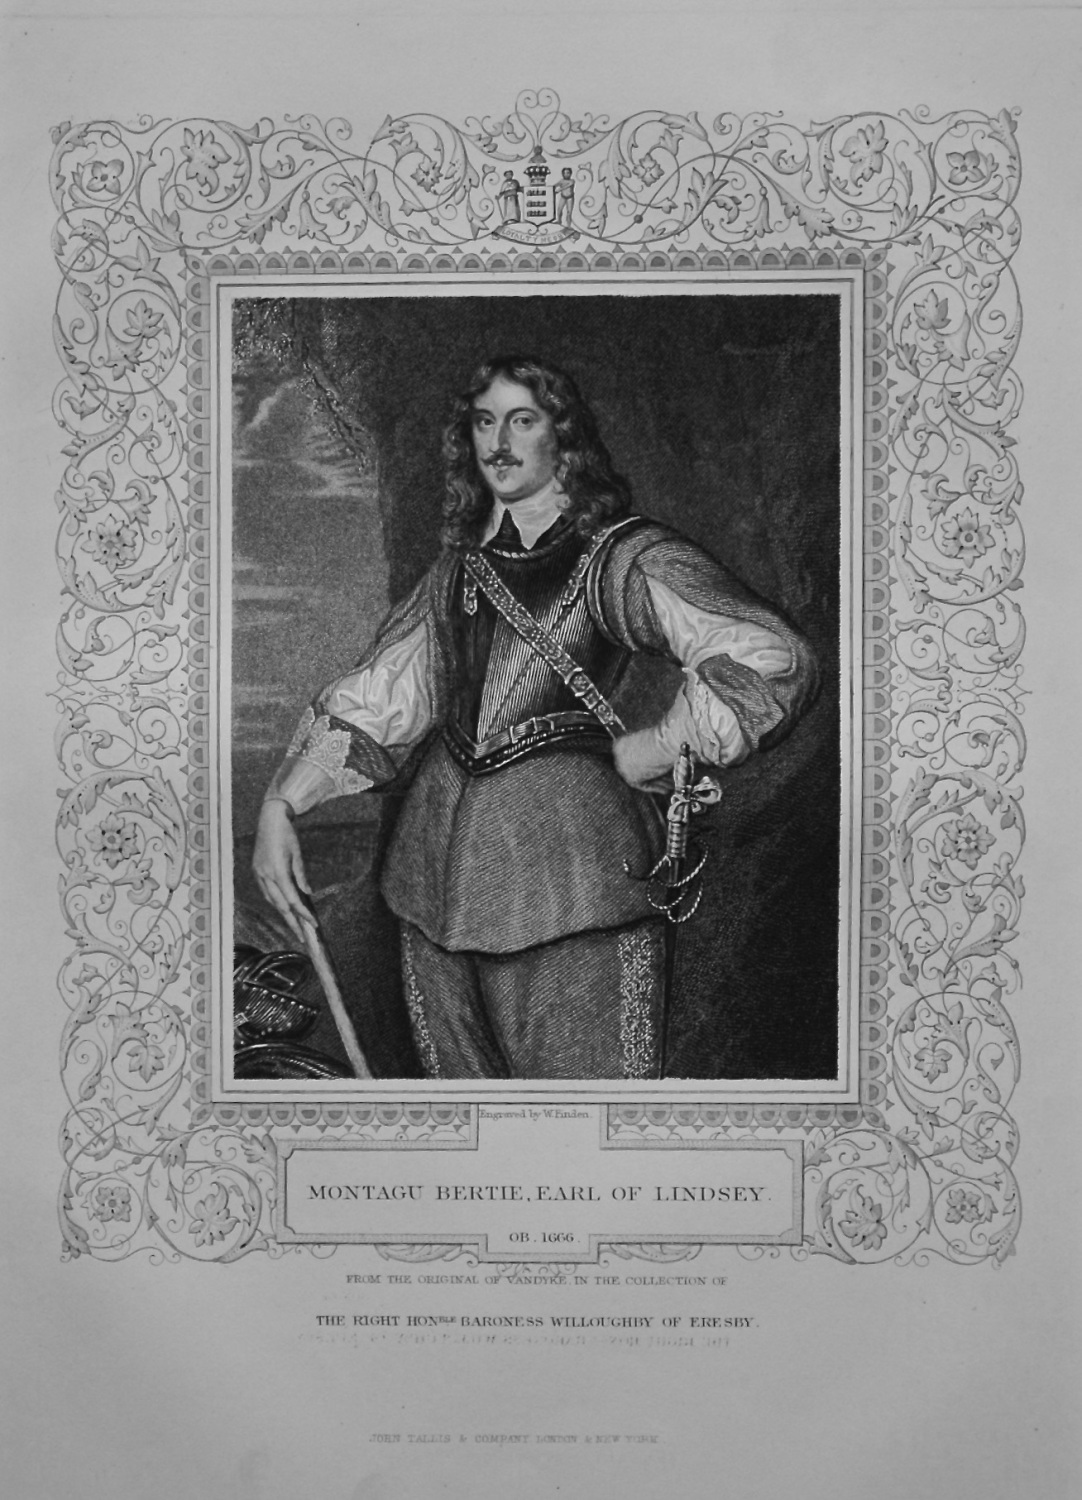 Montagu Bertie, Earl of Lindsey.  OB. 1666.  From the original of Vandyke, 